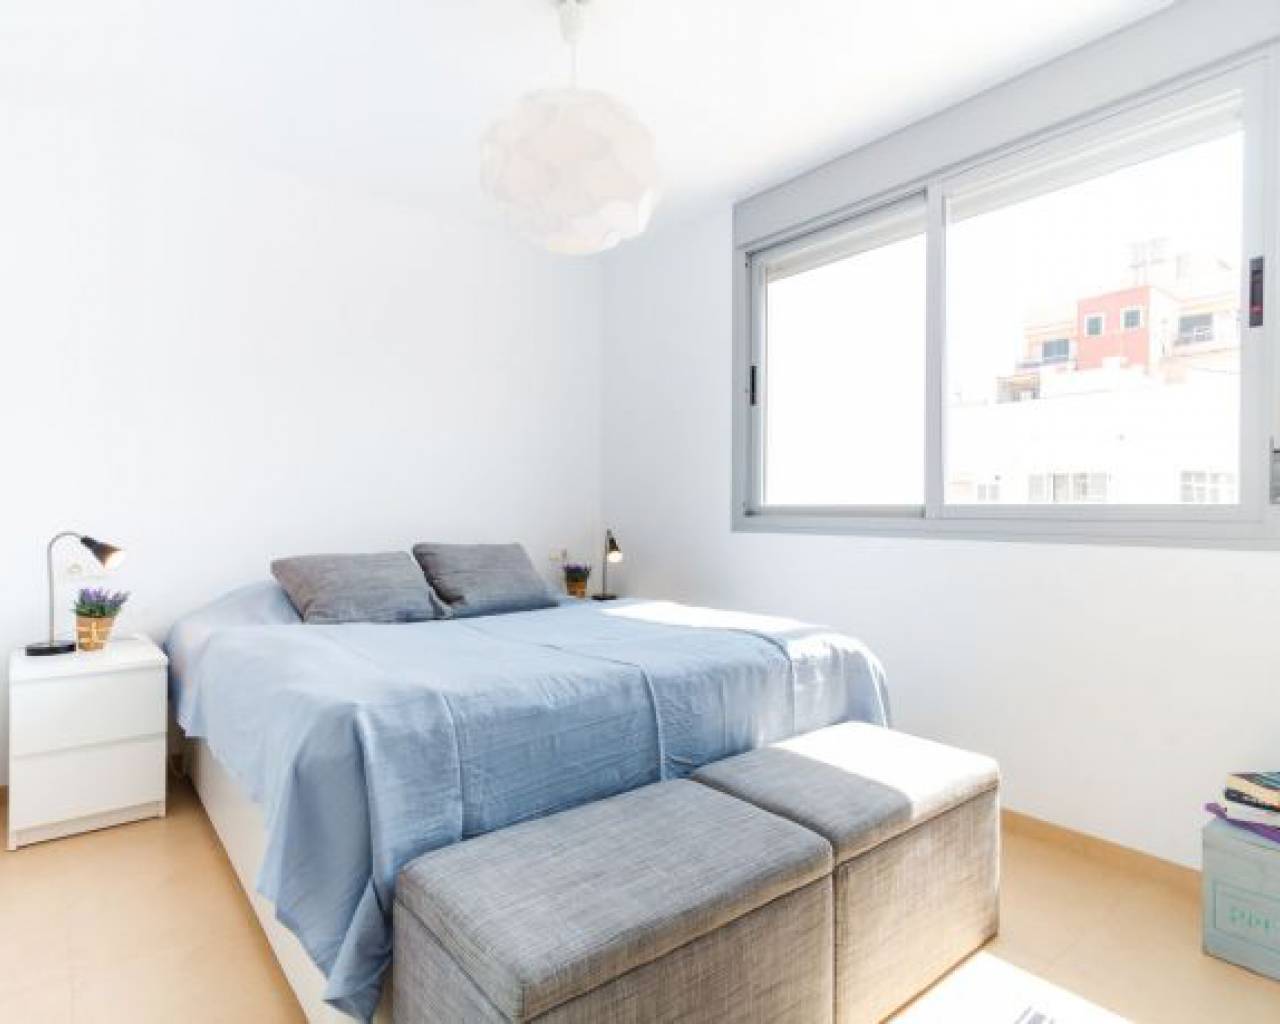 3 Bedroom apartment in Palma-Mallorca rental agents